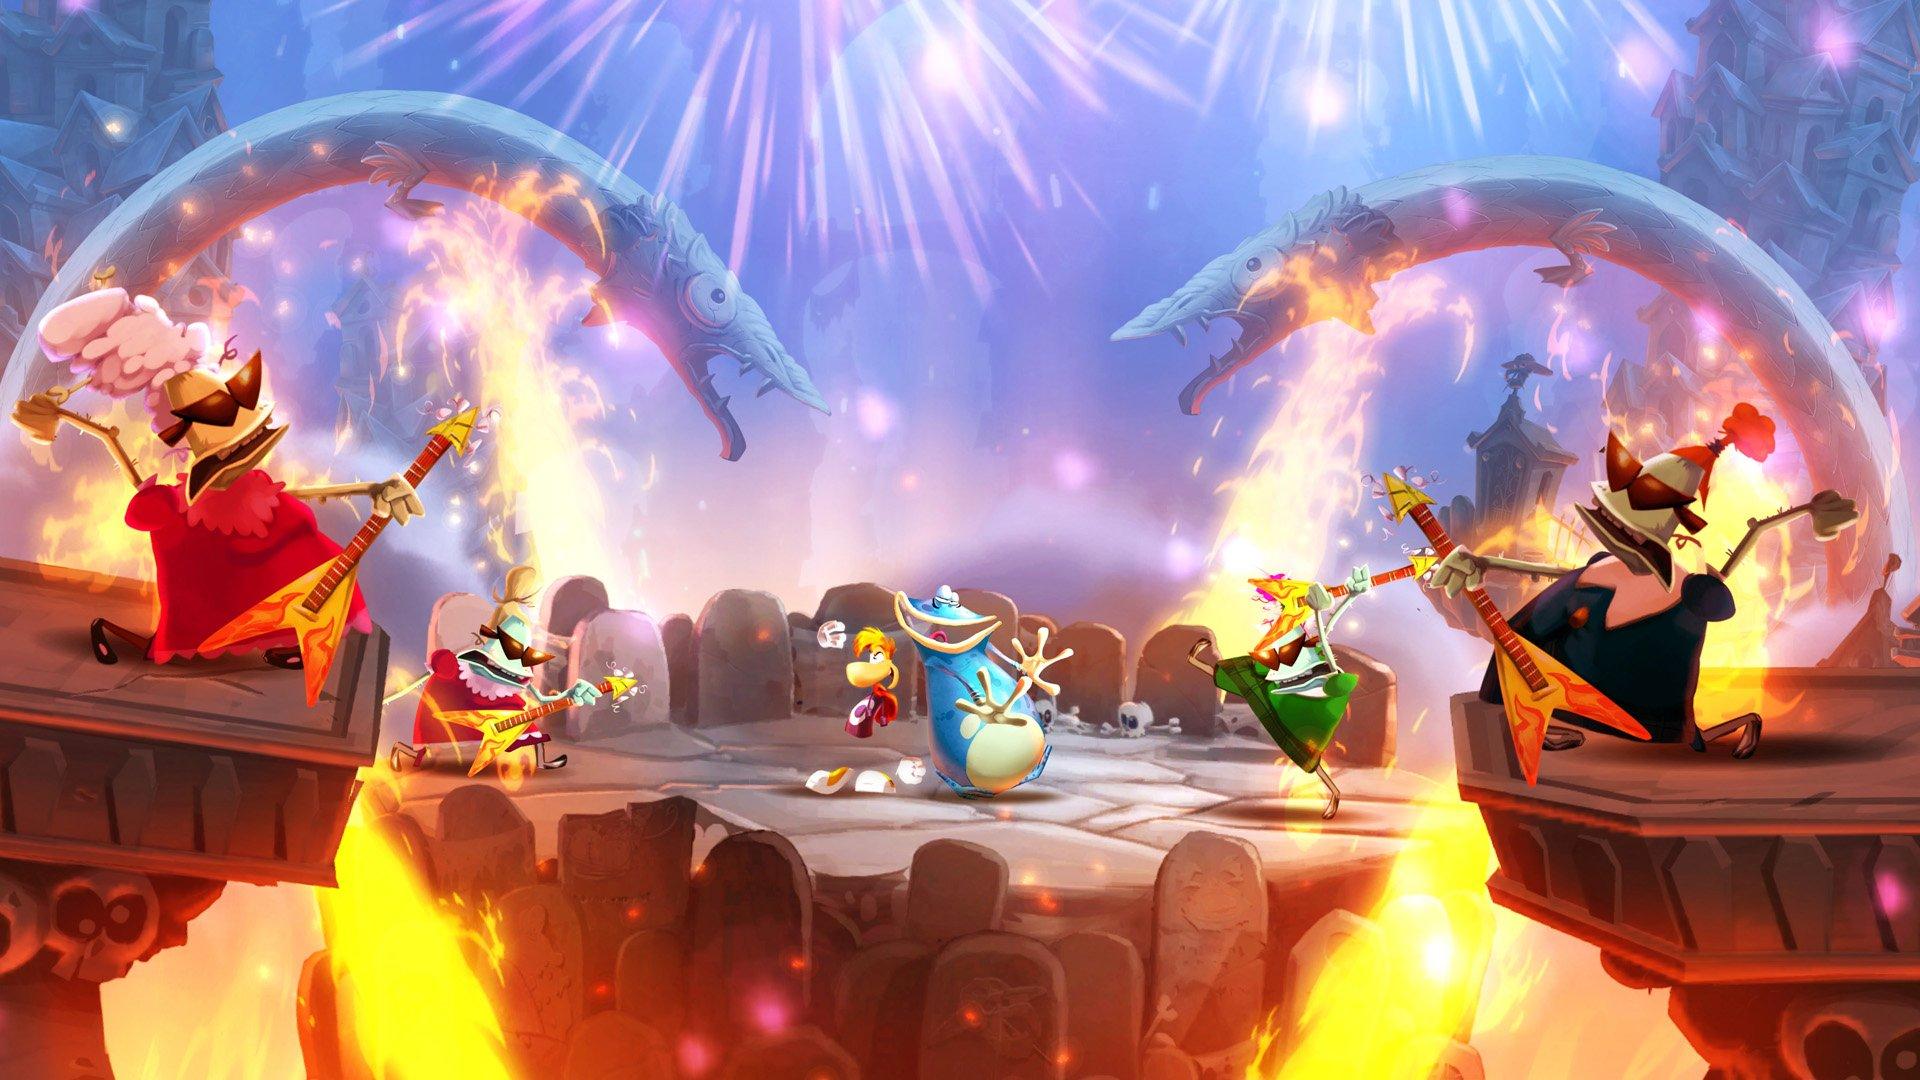 Rayman Legends Video Preview - Beyond A Wii U Novelty - Game Informer